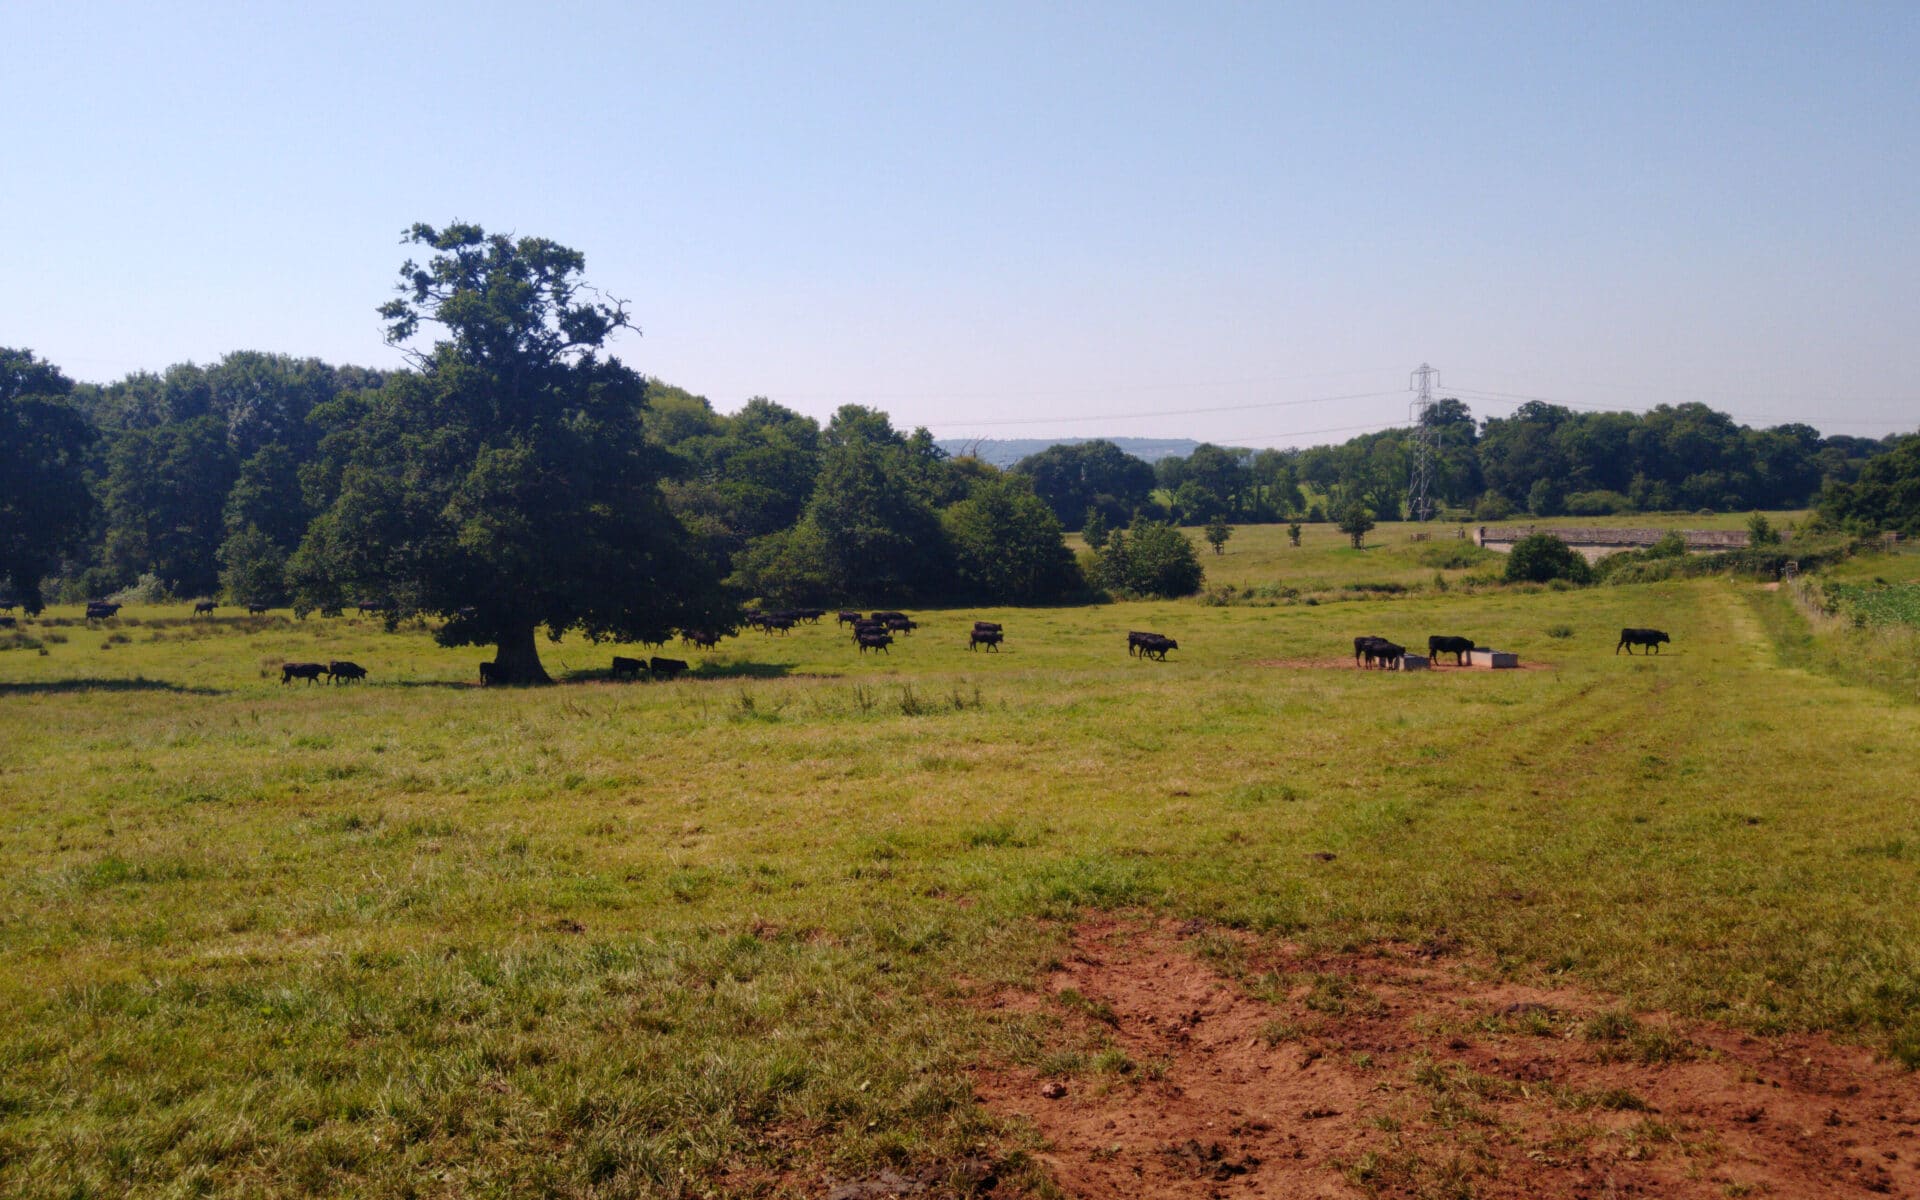 Black cows grazing in a field by Three Arch Bridge